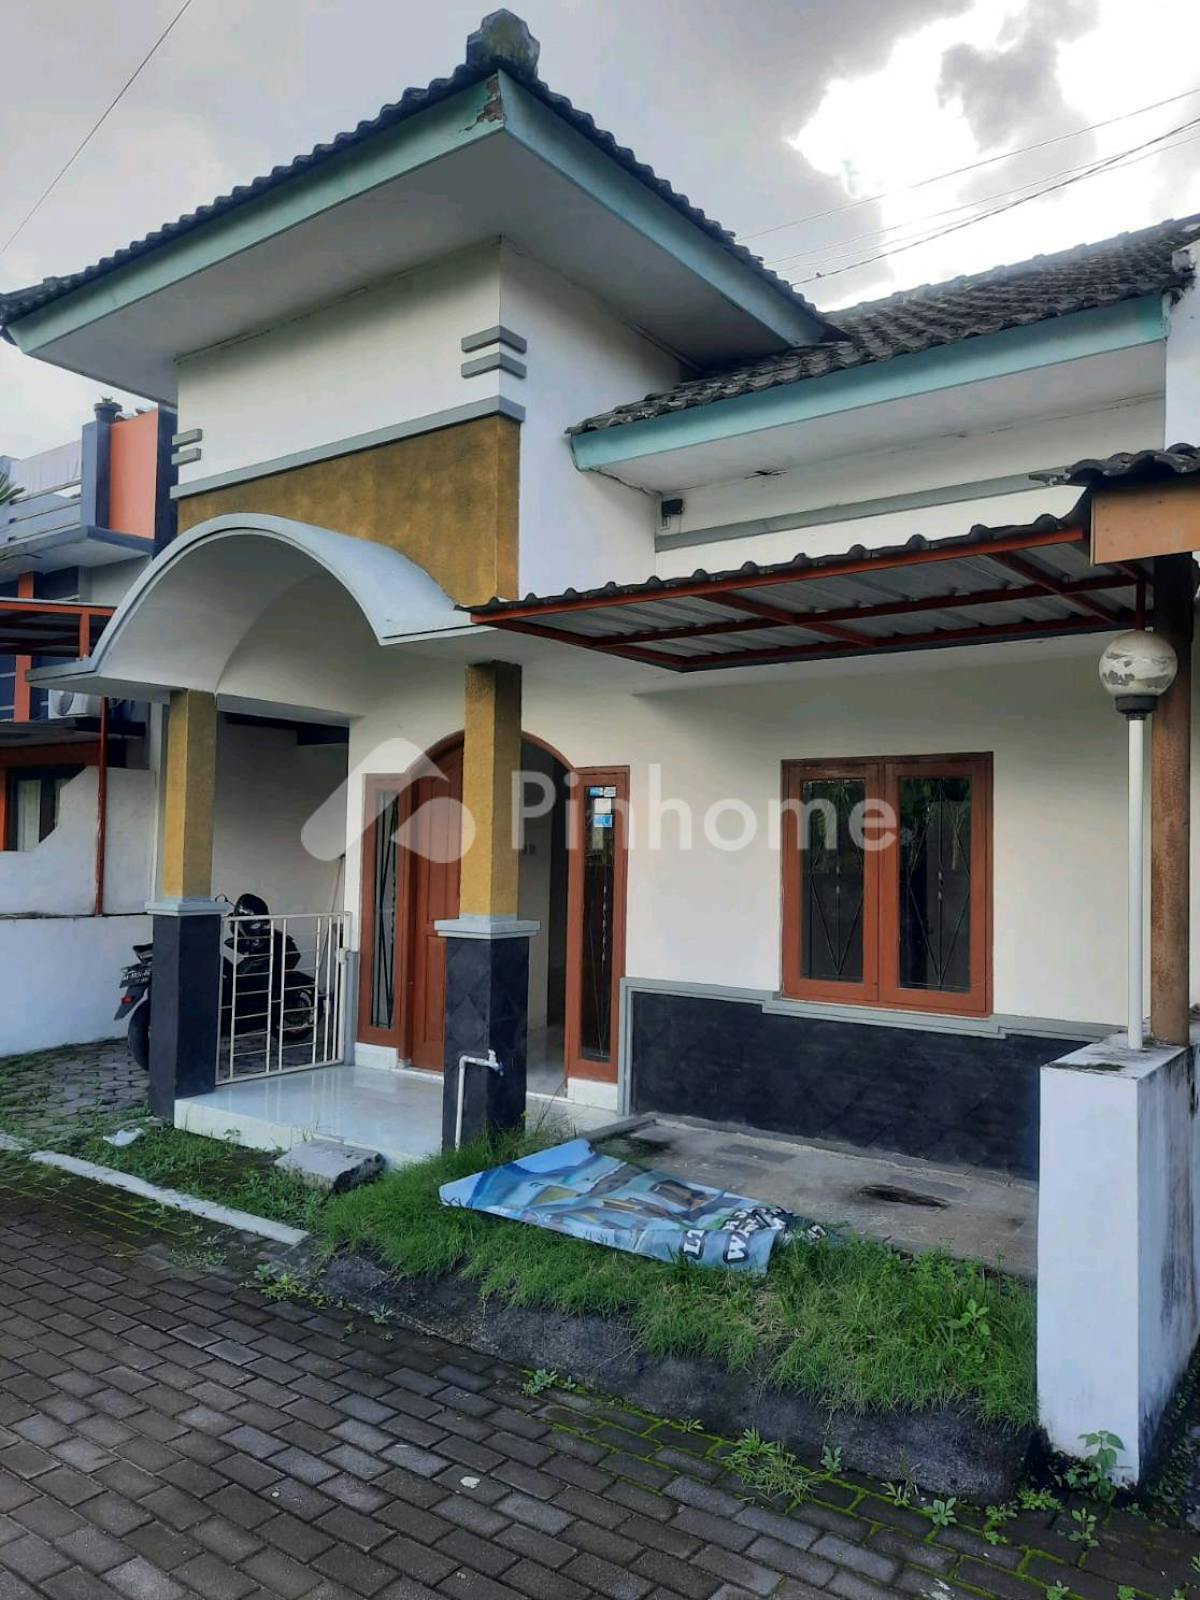 Dijual Rumah Siap Huni Di Tiyasan Concat di Condongcatur (Condong Catur) - Gambar 1